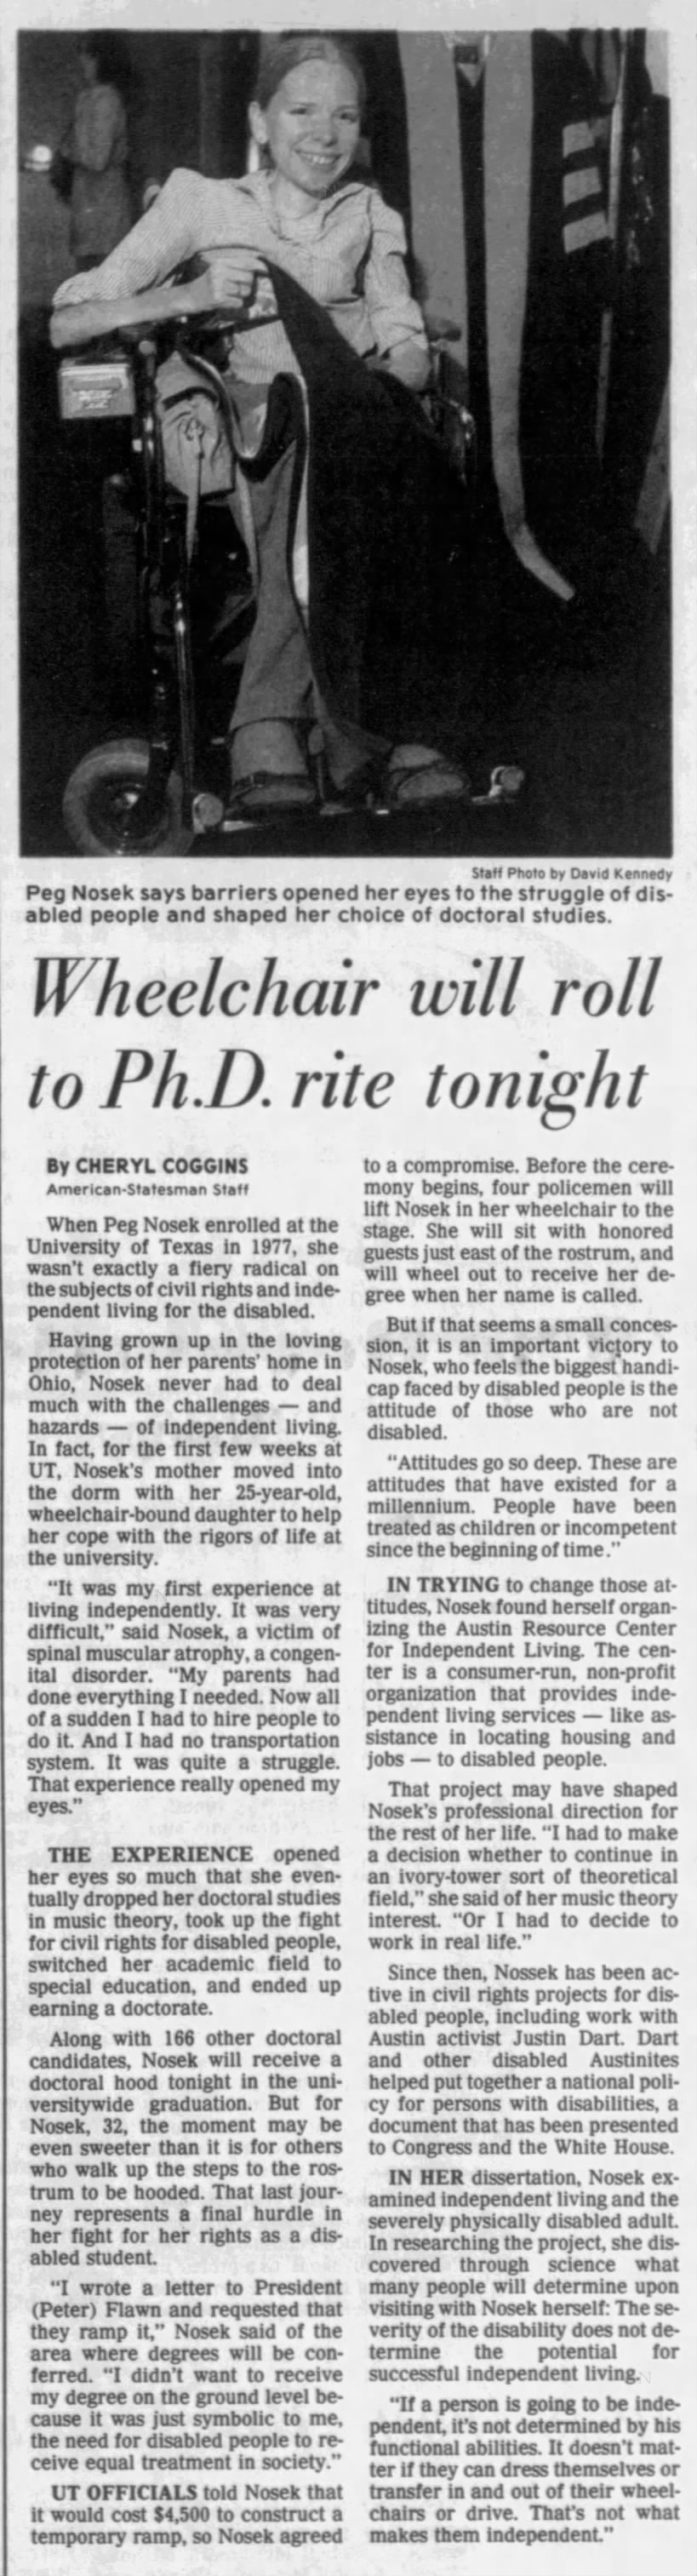 wheelchair will roll to Ph.D. rite tonight/Cheryl Coggins